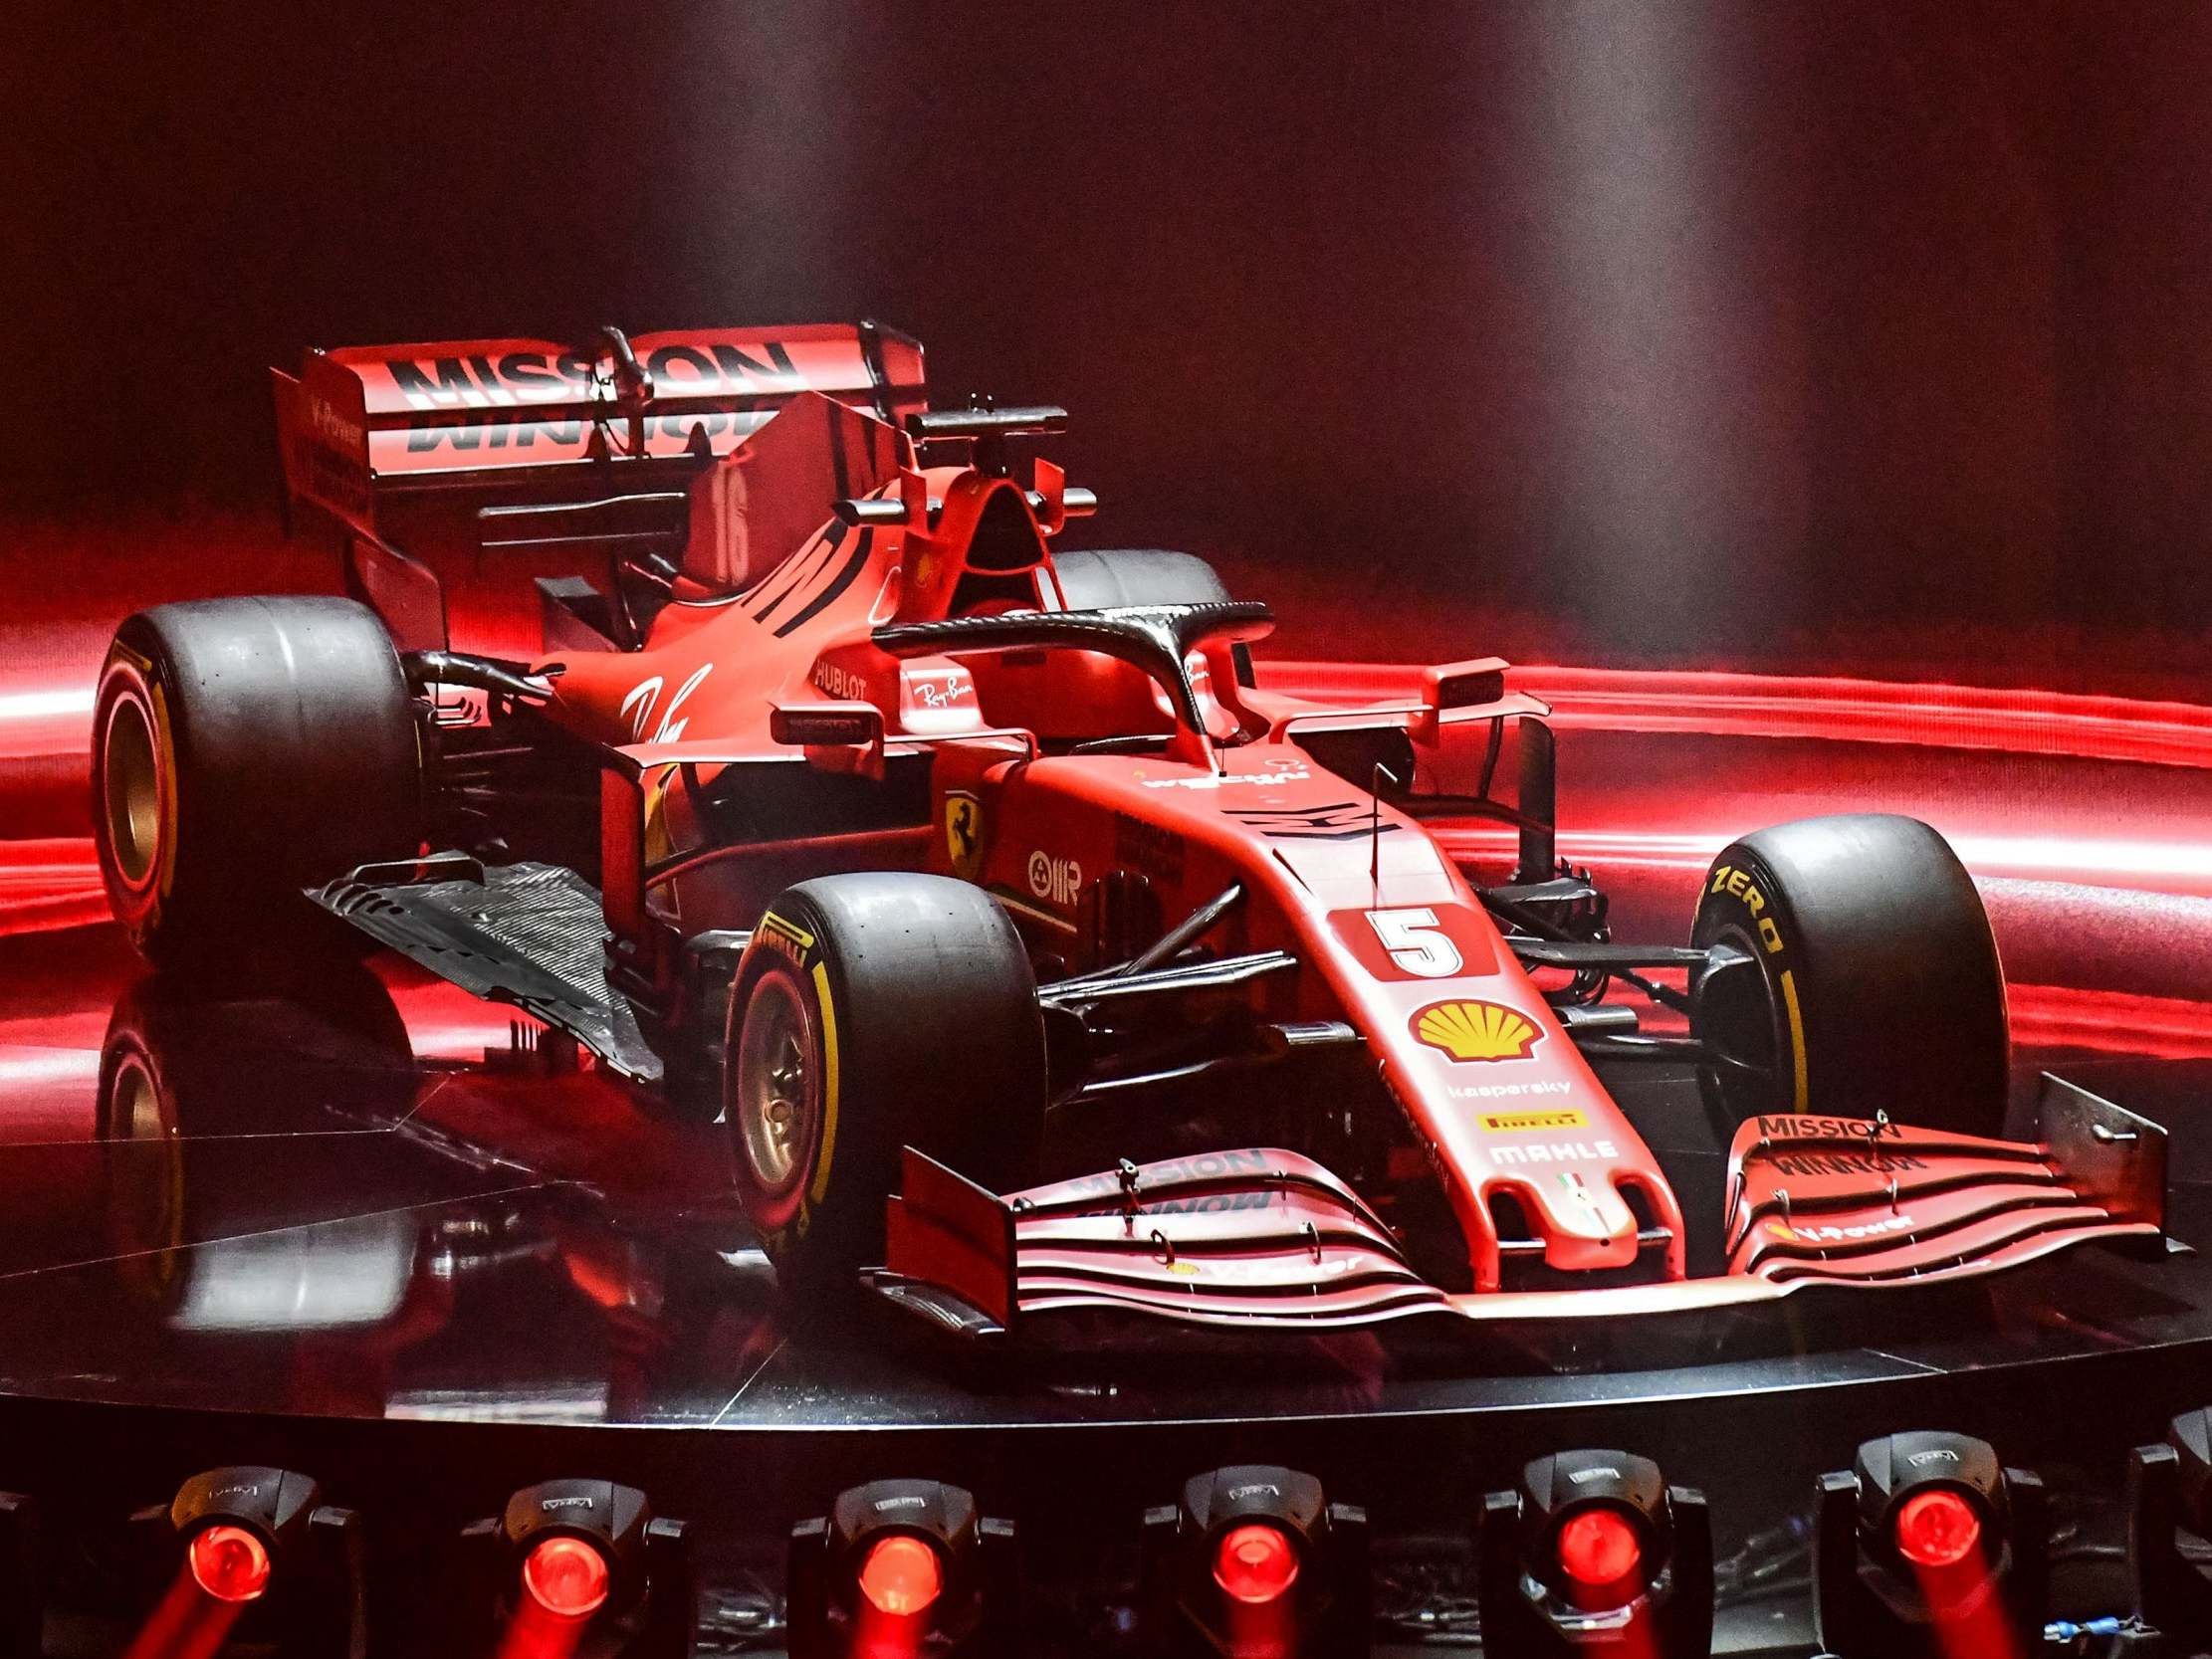 Ferrari finished second in last season's Constructors' Championship